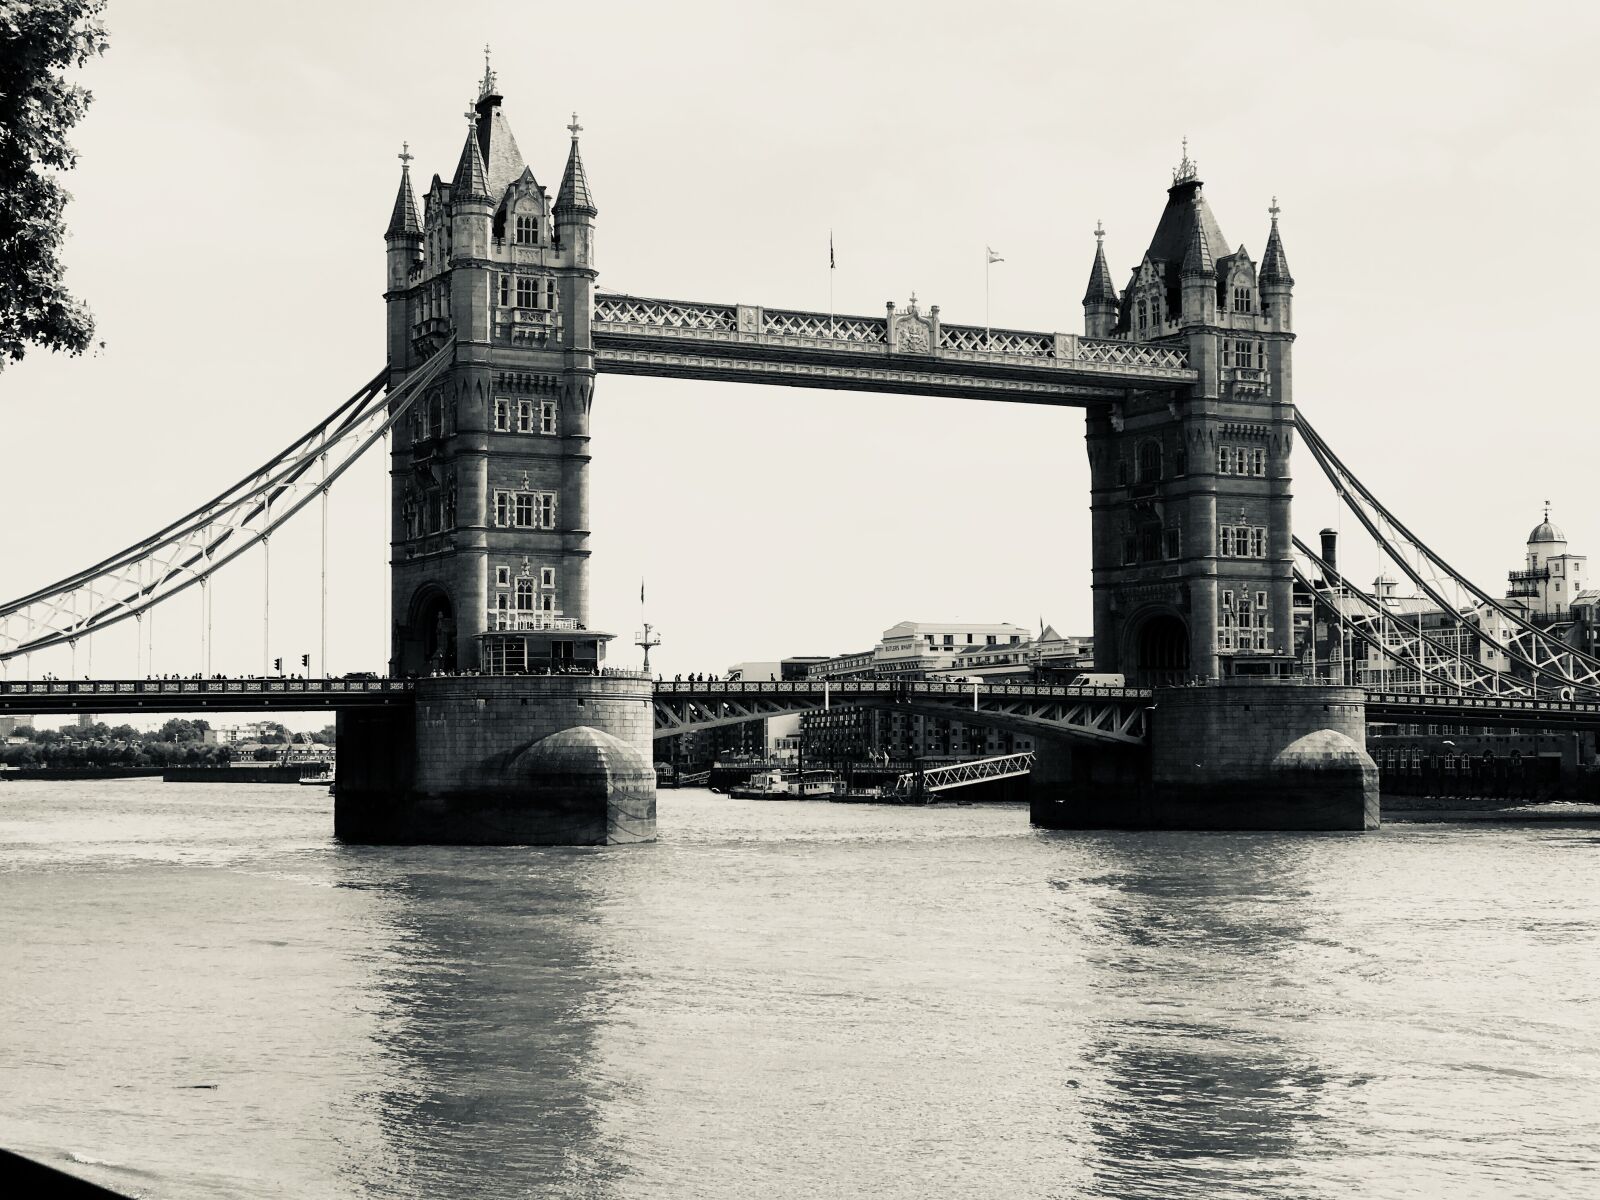 iPhone 7 Plus back dual camera 6.6mm f/2.8 sample photo. Tower bridge, london, landmark photography